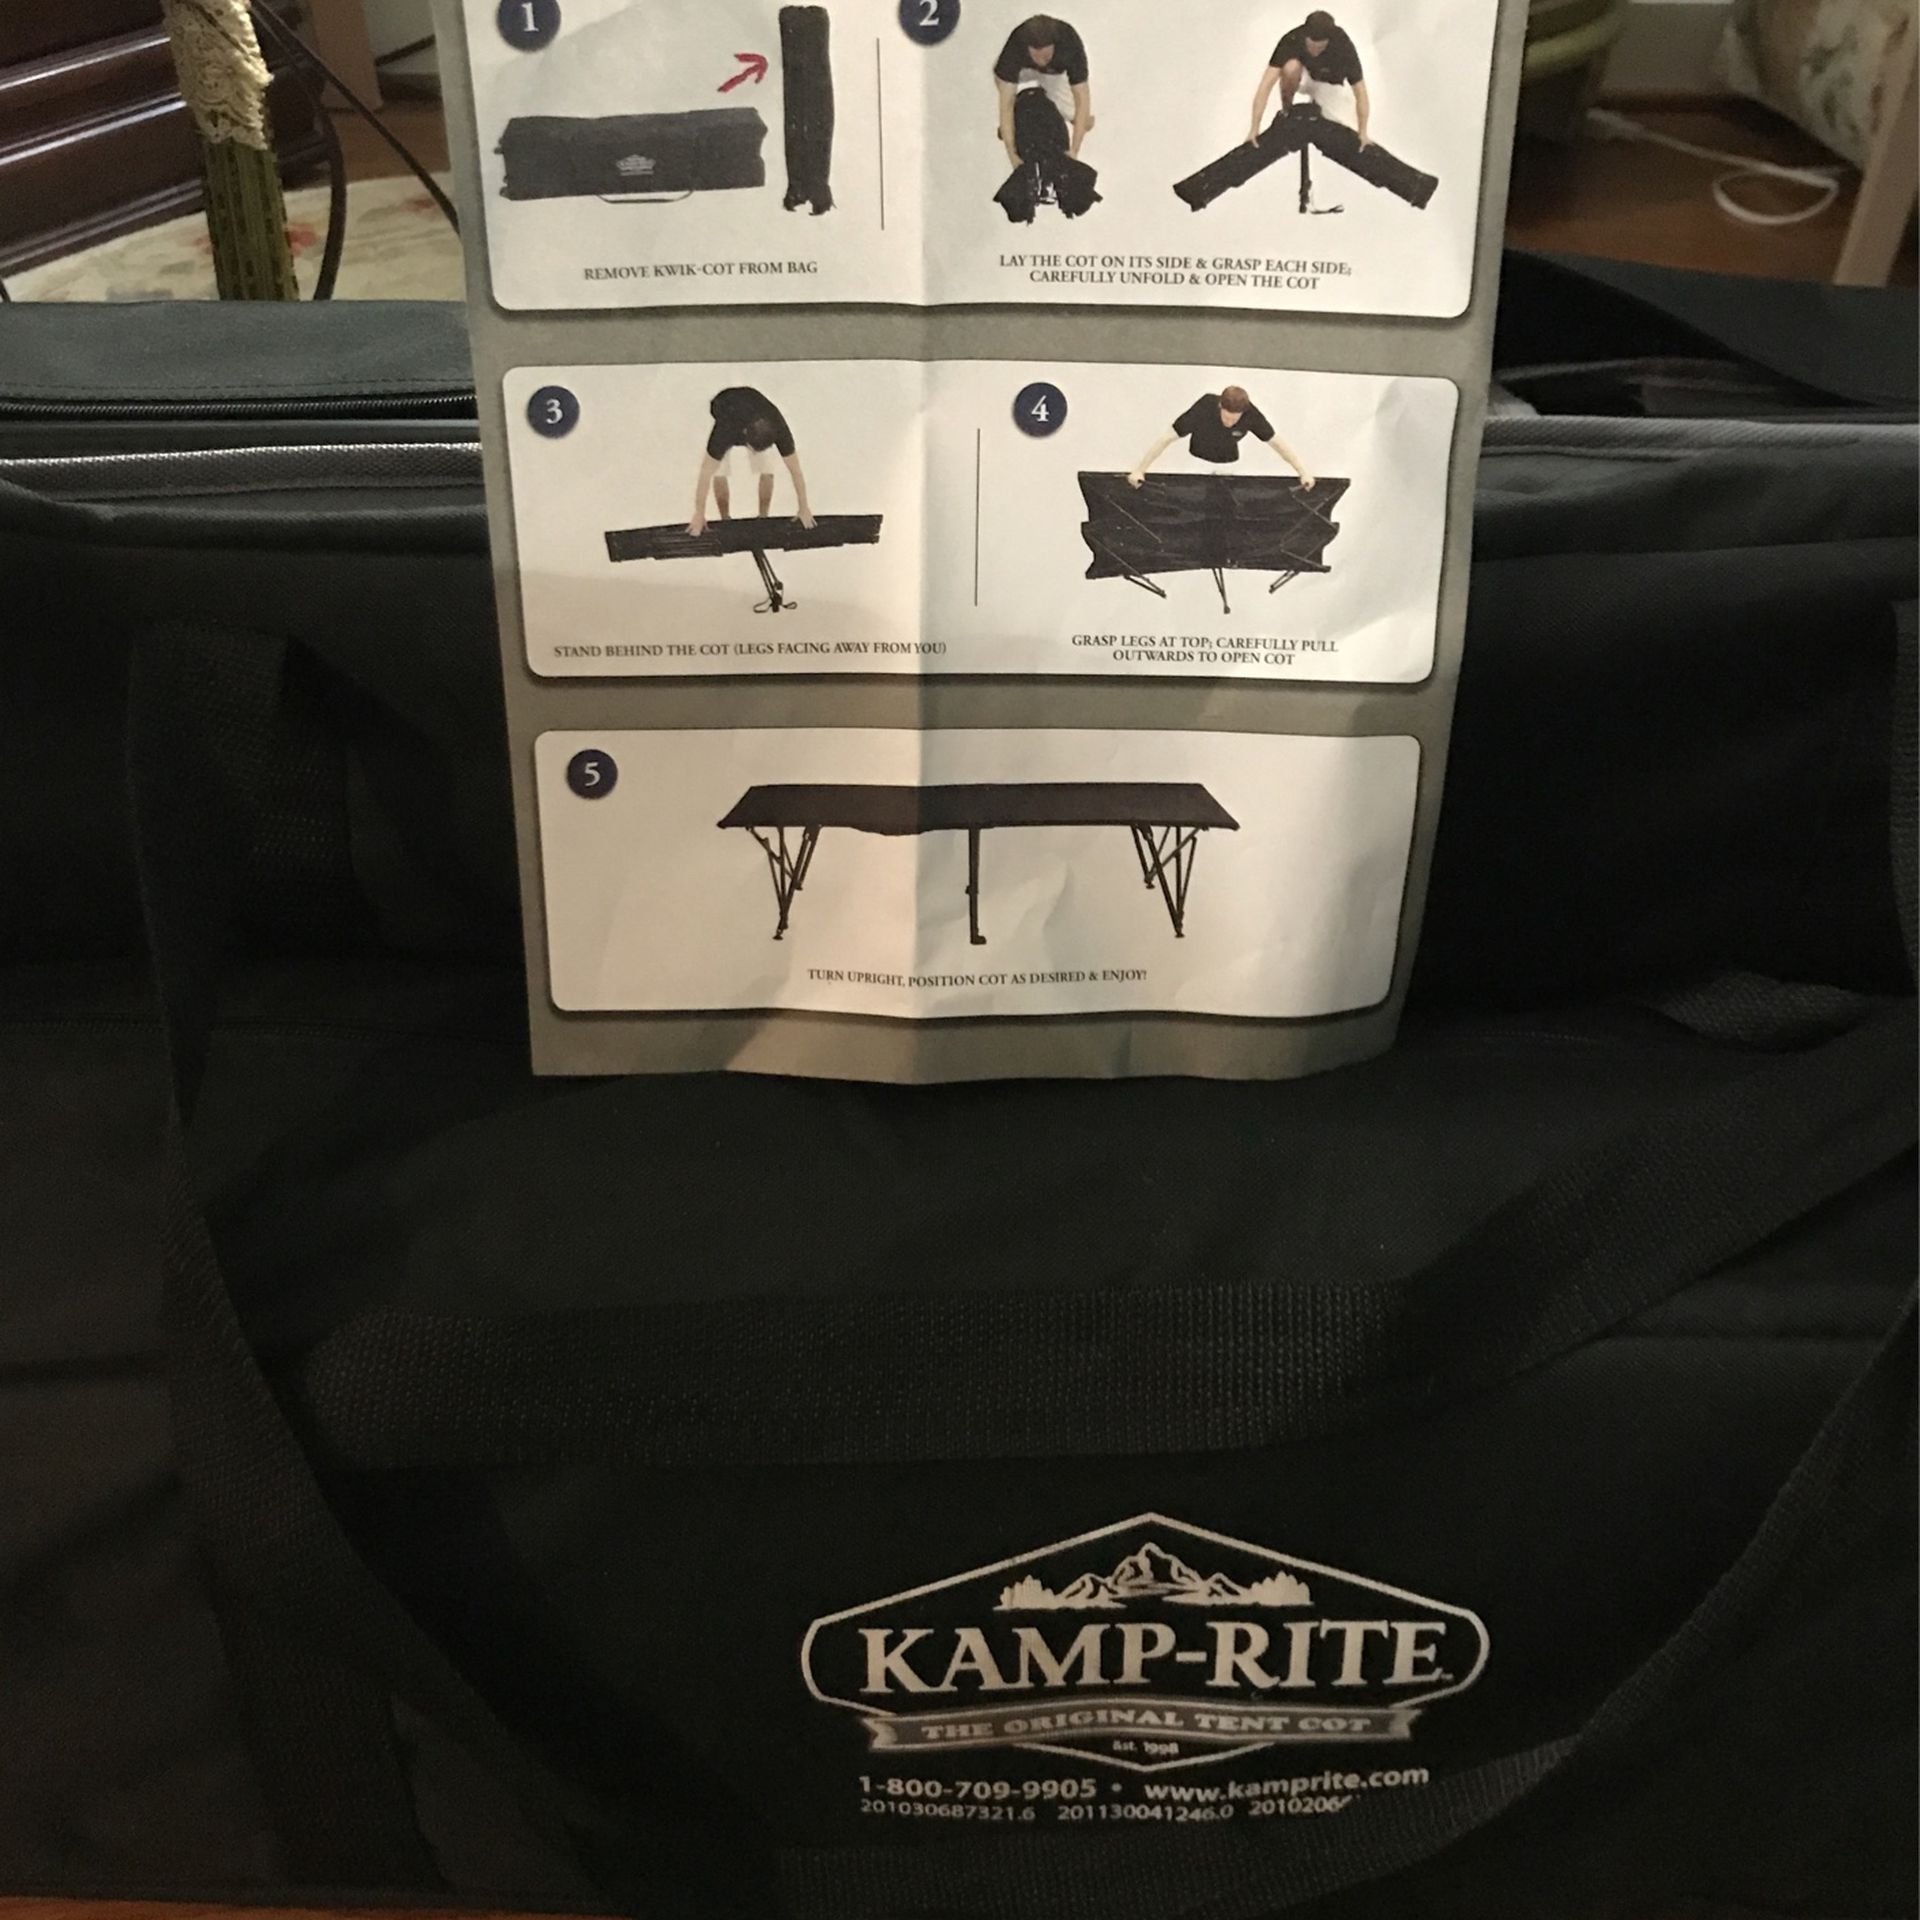 New: Still In The Bag : KAMP-RITEOriginsl TenT COT